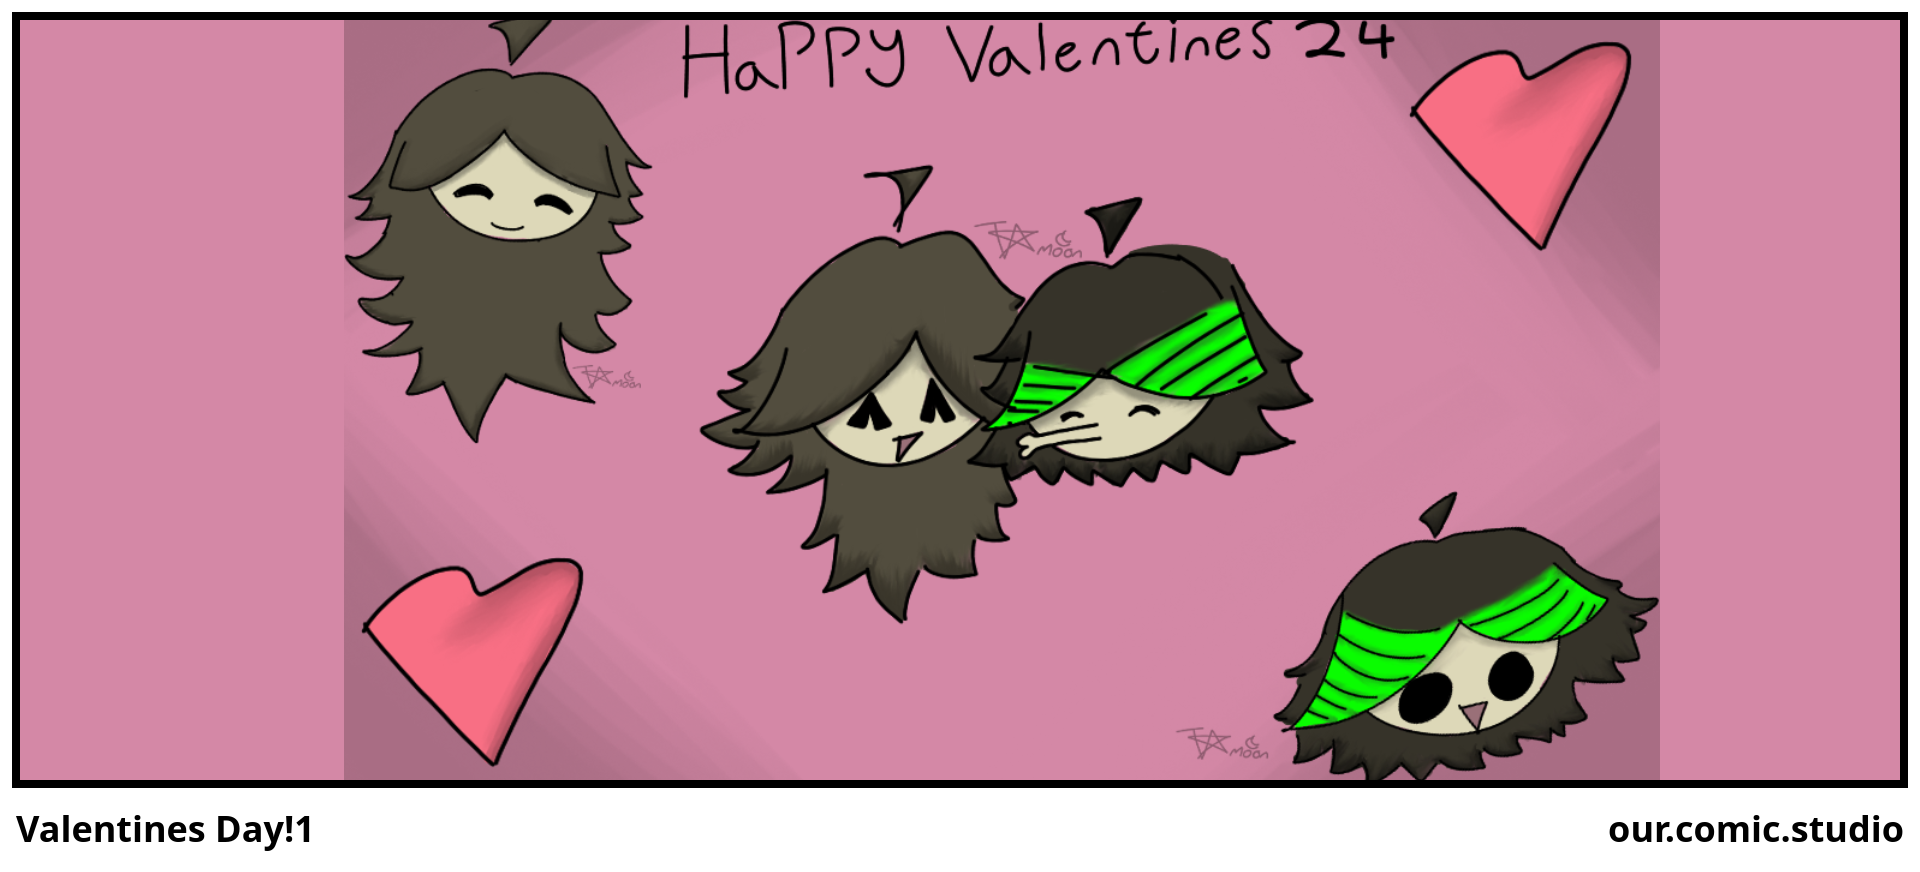 Valentines Day!1